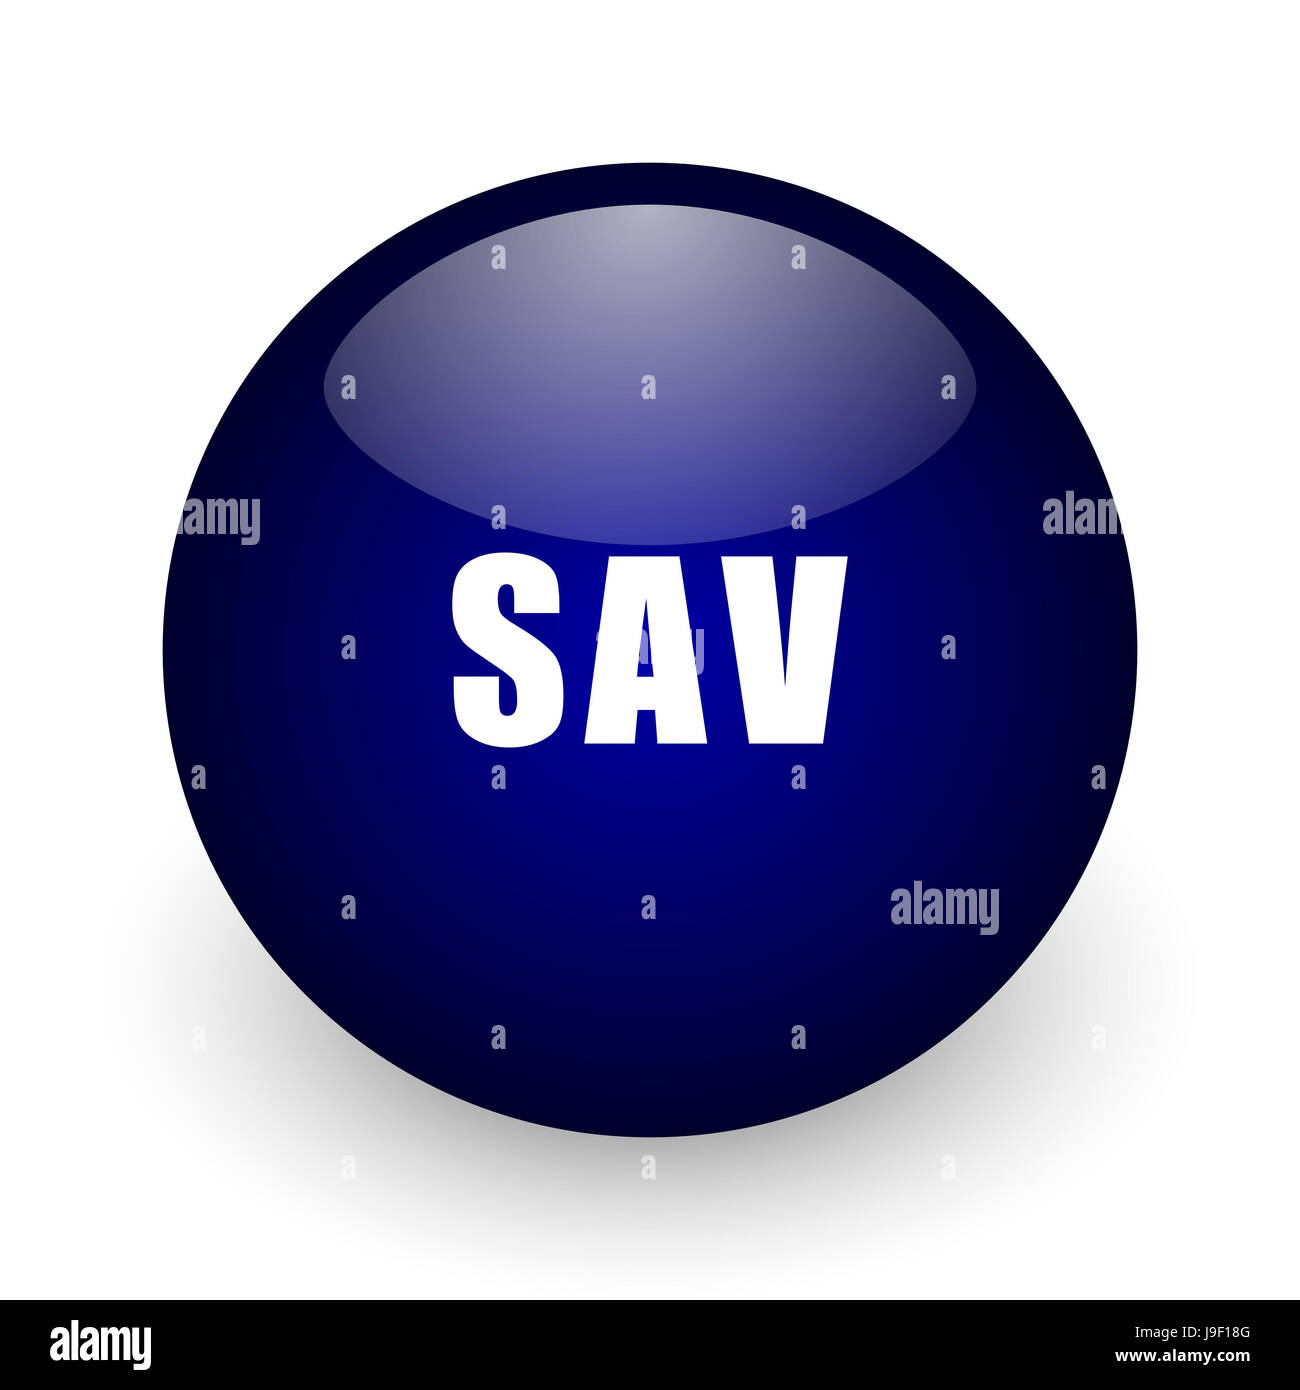 Sav blue glossy ball web icon on white background. Round 3d render button. Stock Photo